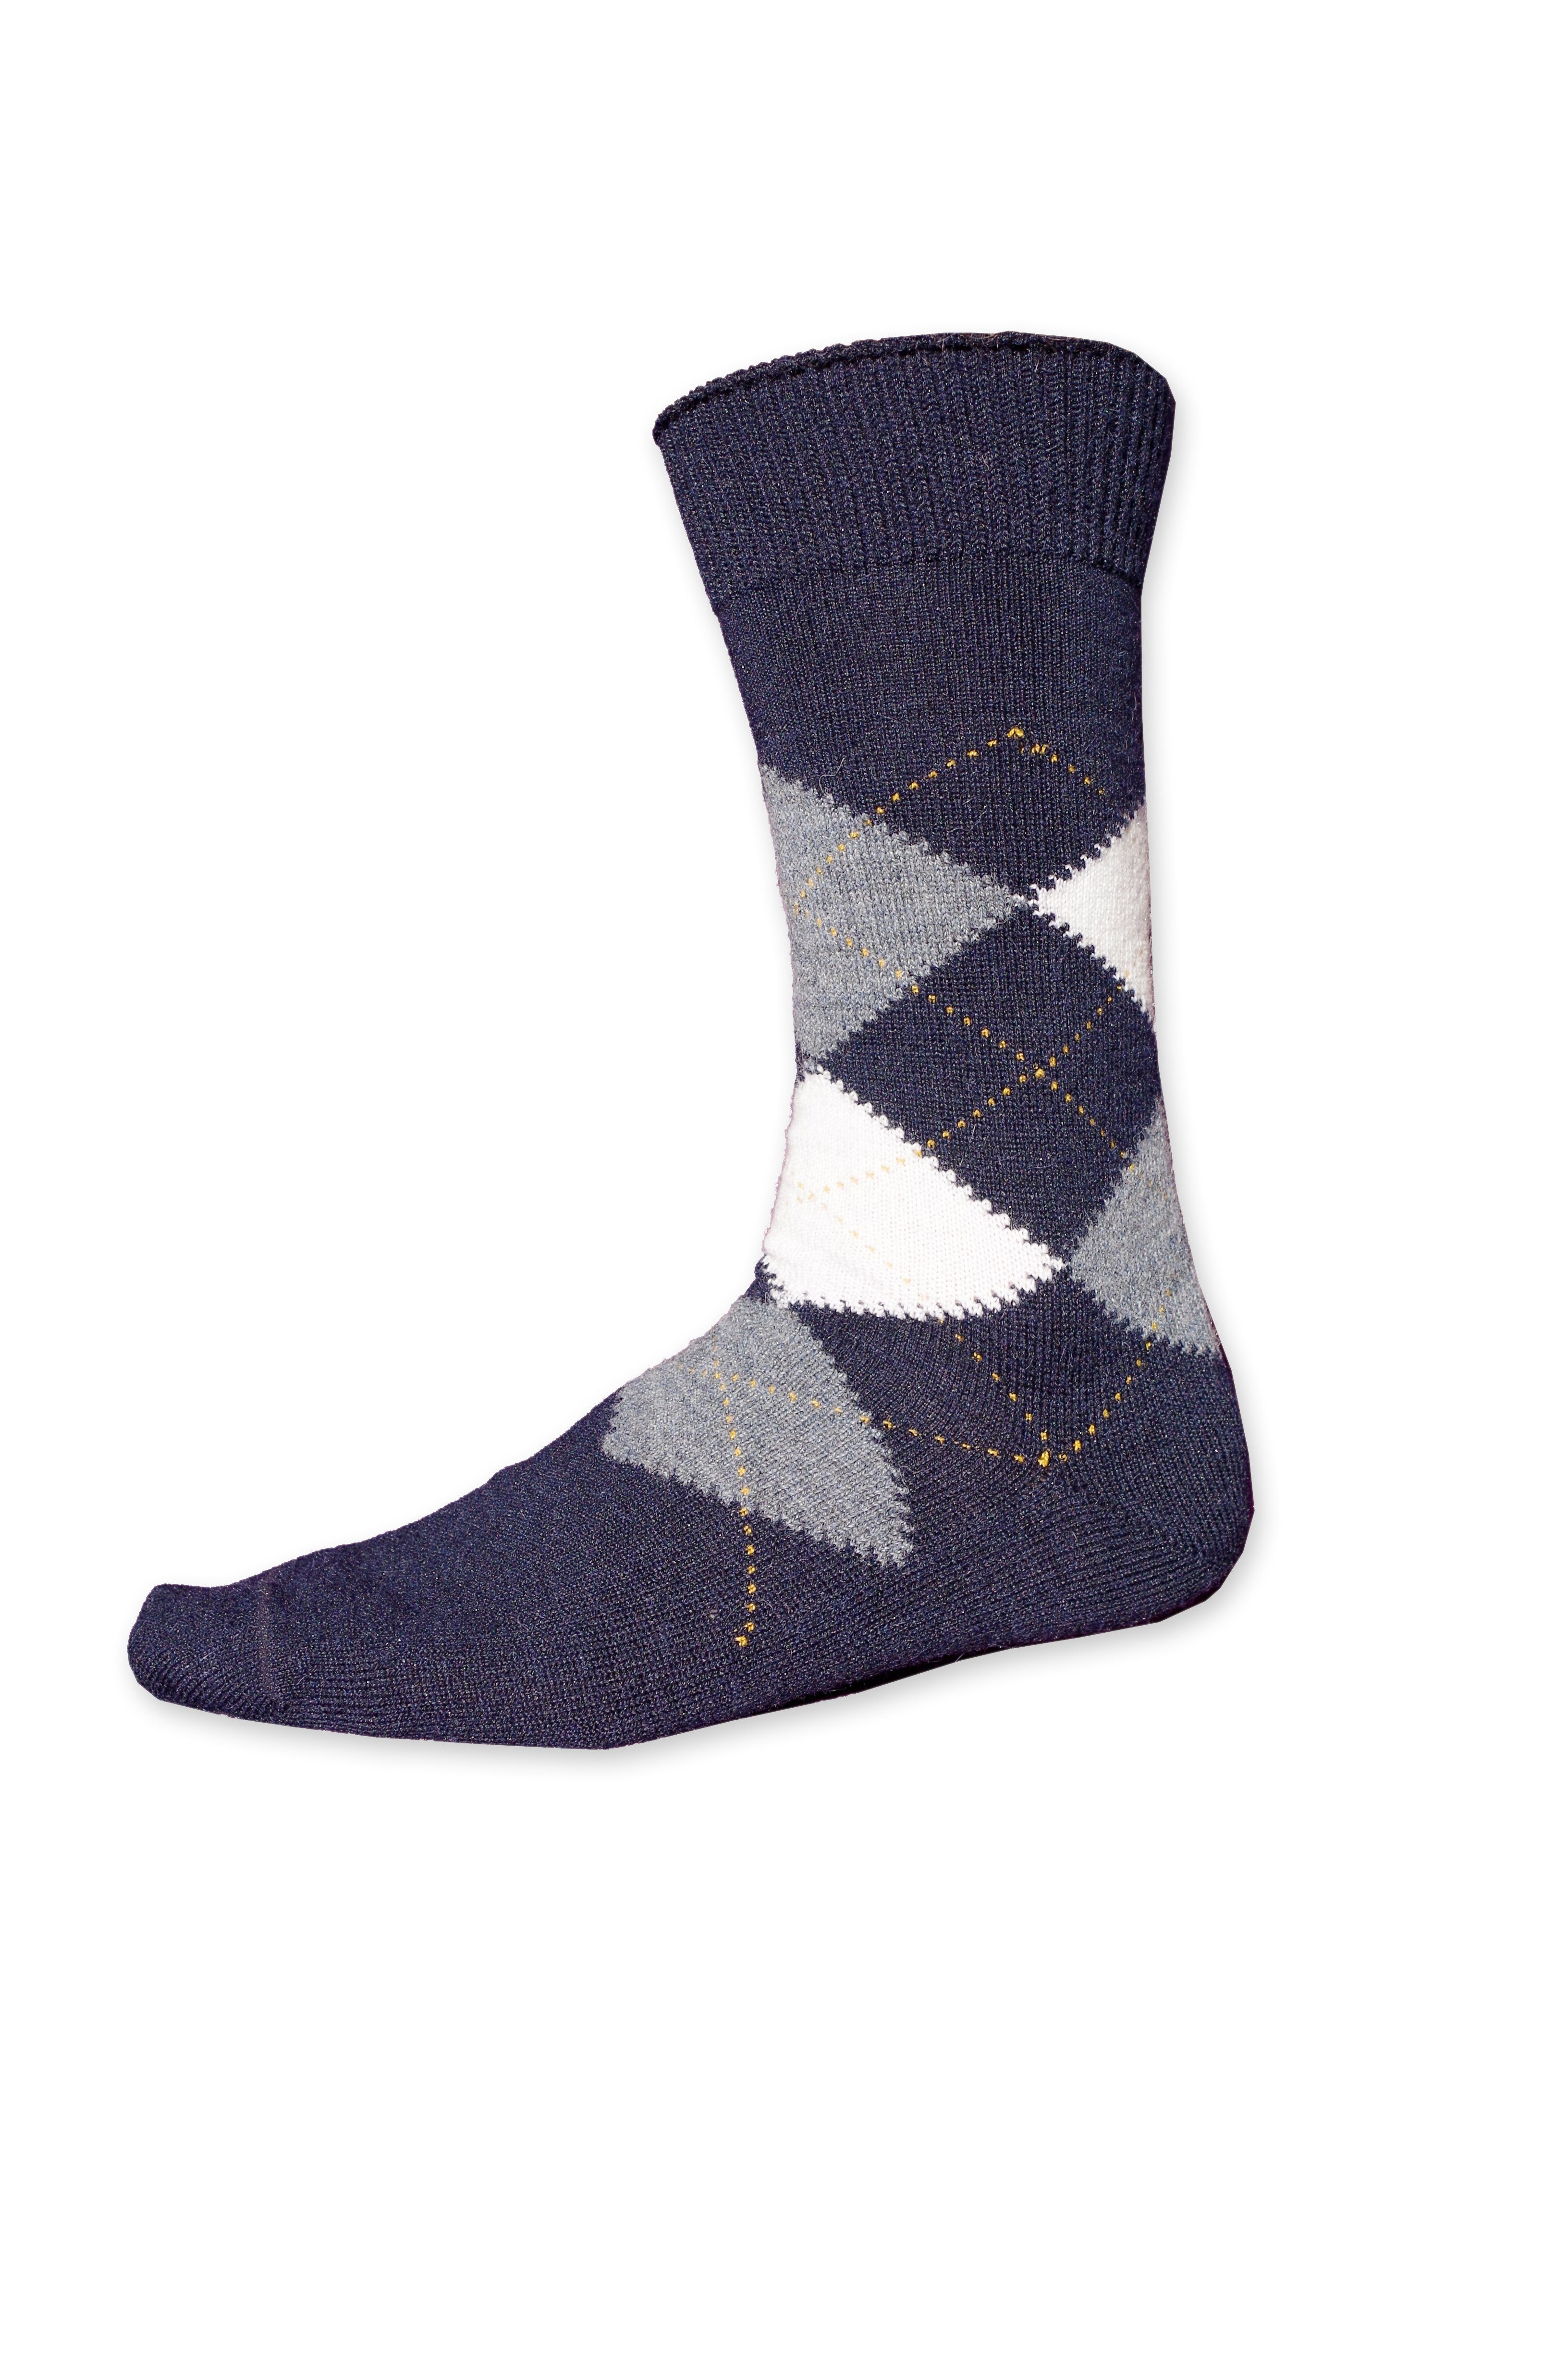 Posh Gear Socken Alpakawolle, Paar Polycryl, (3-Paar) 3 41% Alpaka Businesssocken Carrosito blau 25% Nylon 34